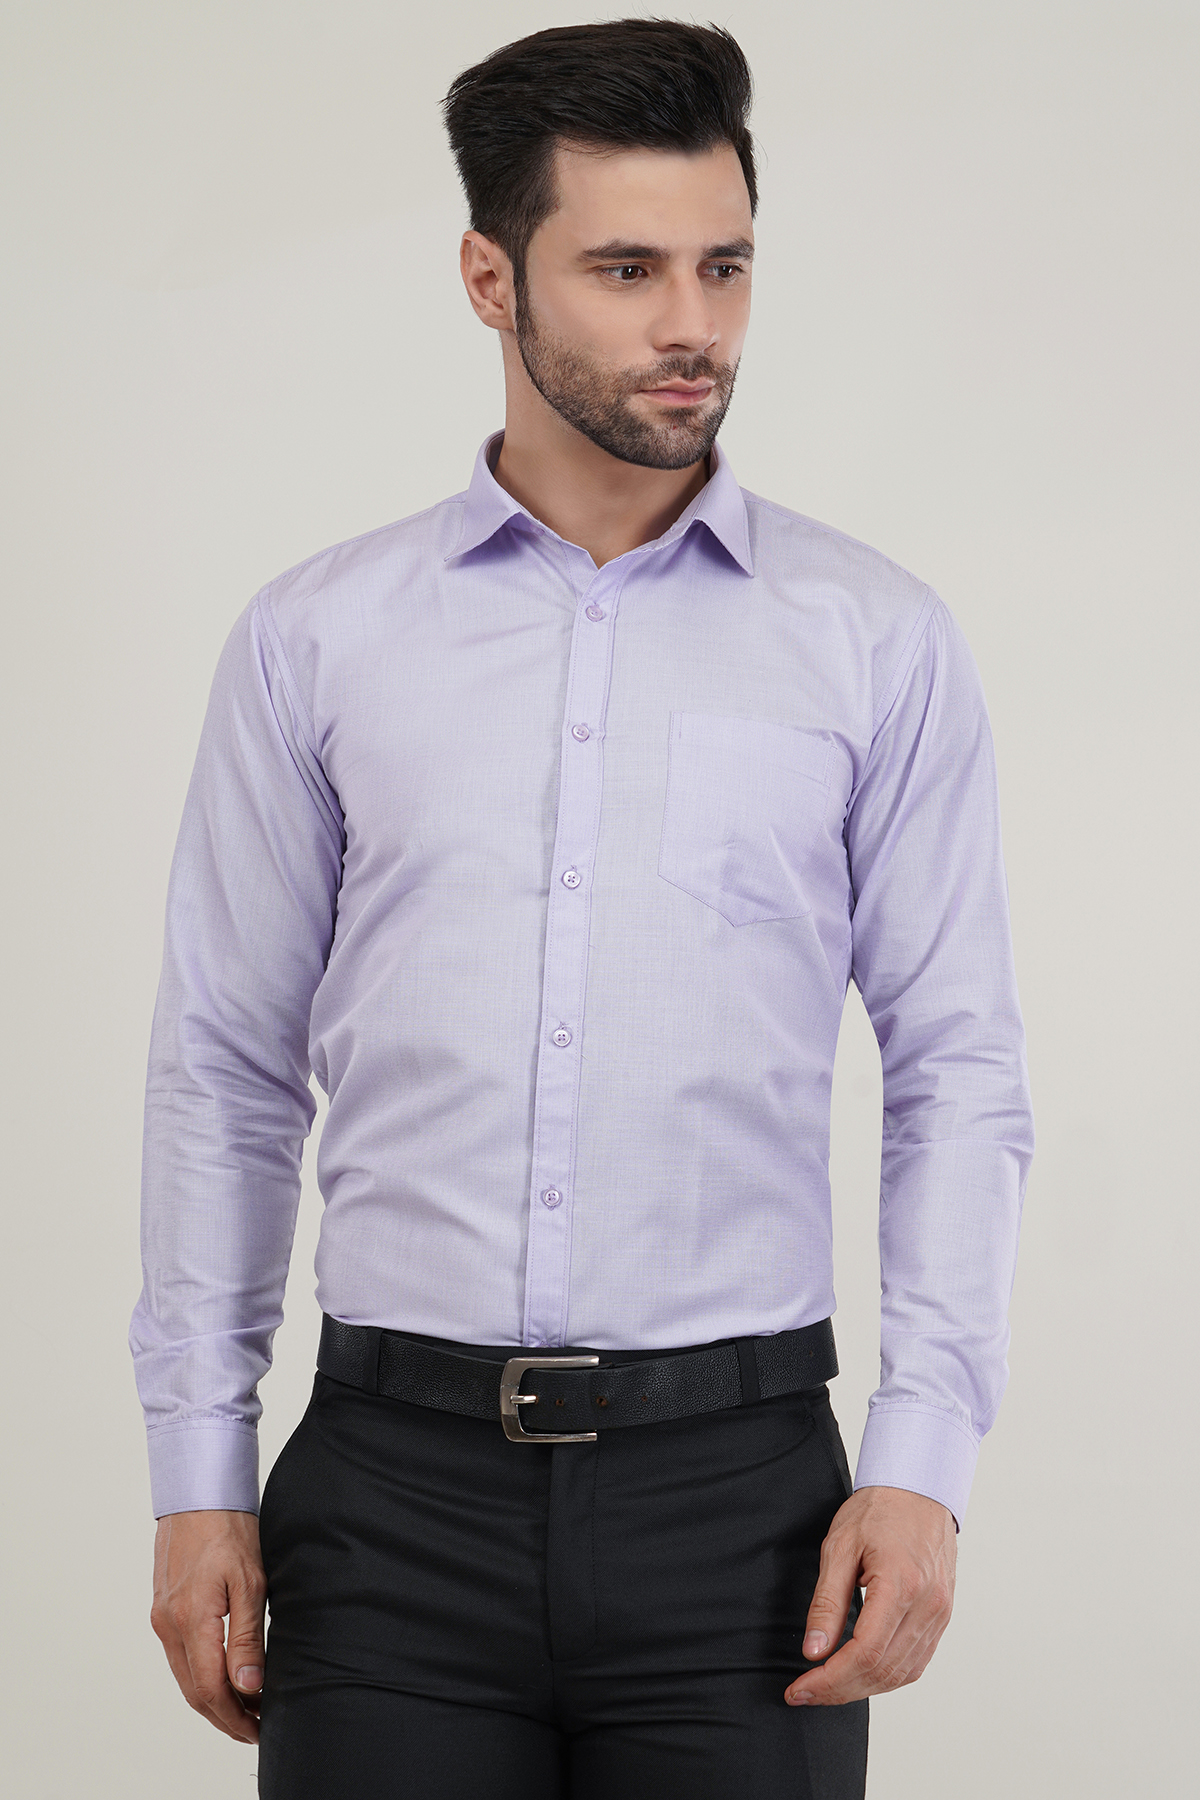 Move Color Fila Fill Soft Premium Cotton Formal Shirt For Men’s